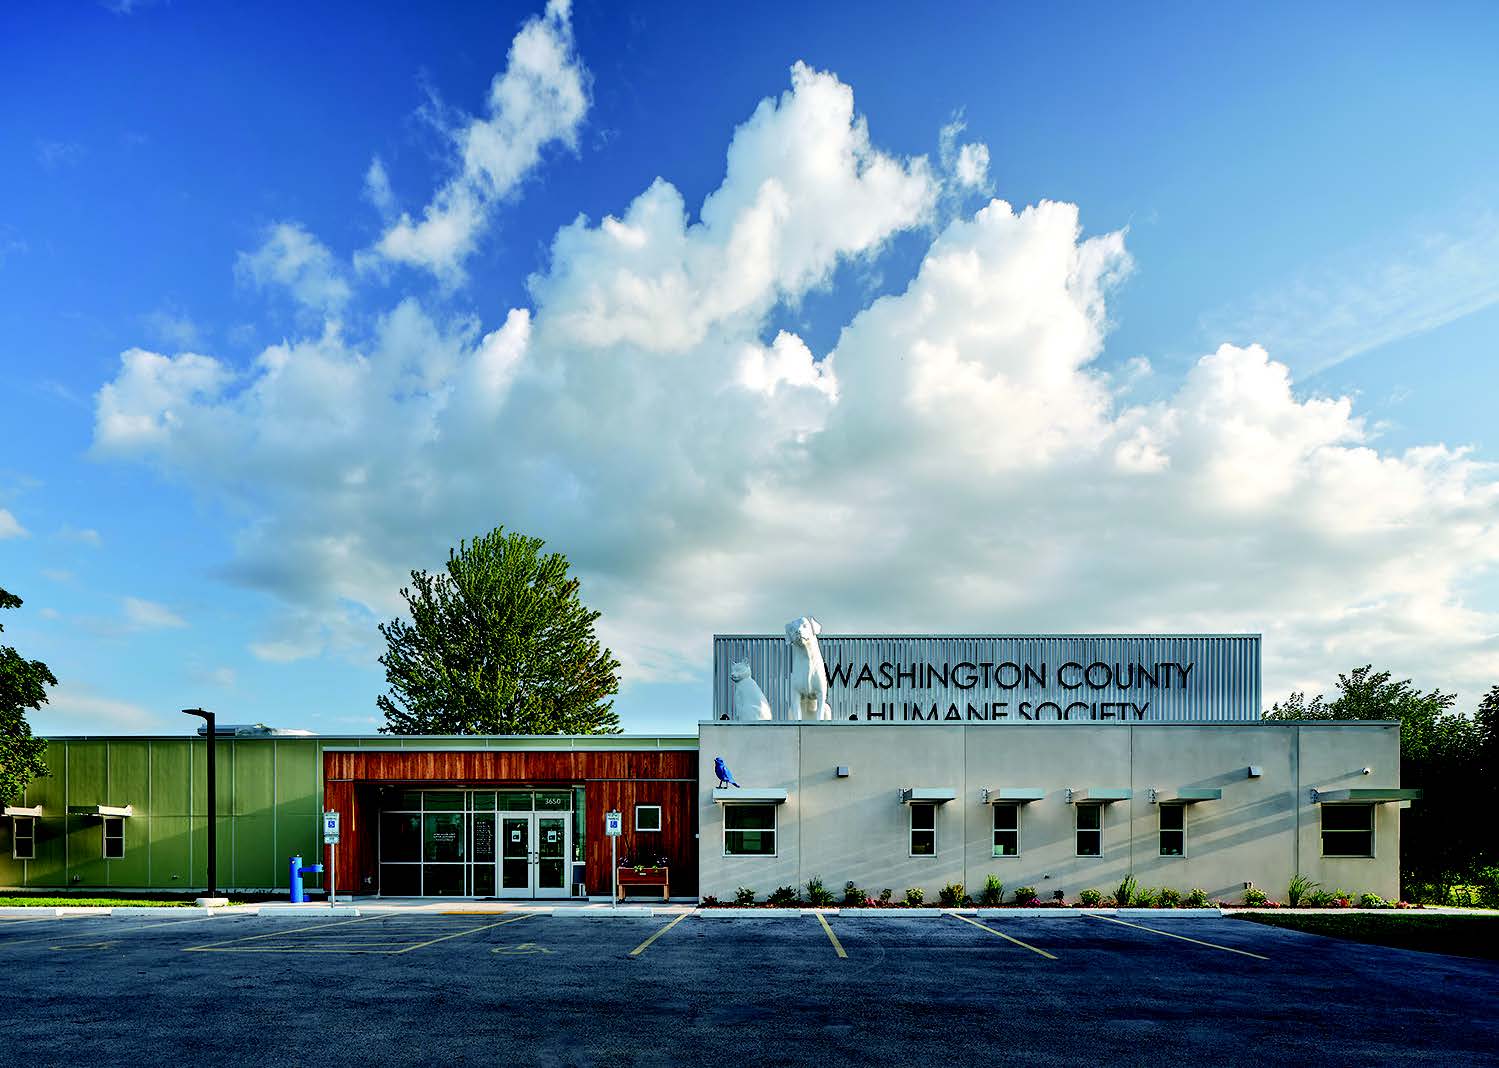 Washington county humane society addition and renovation